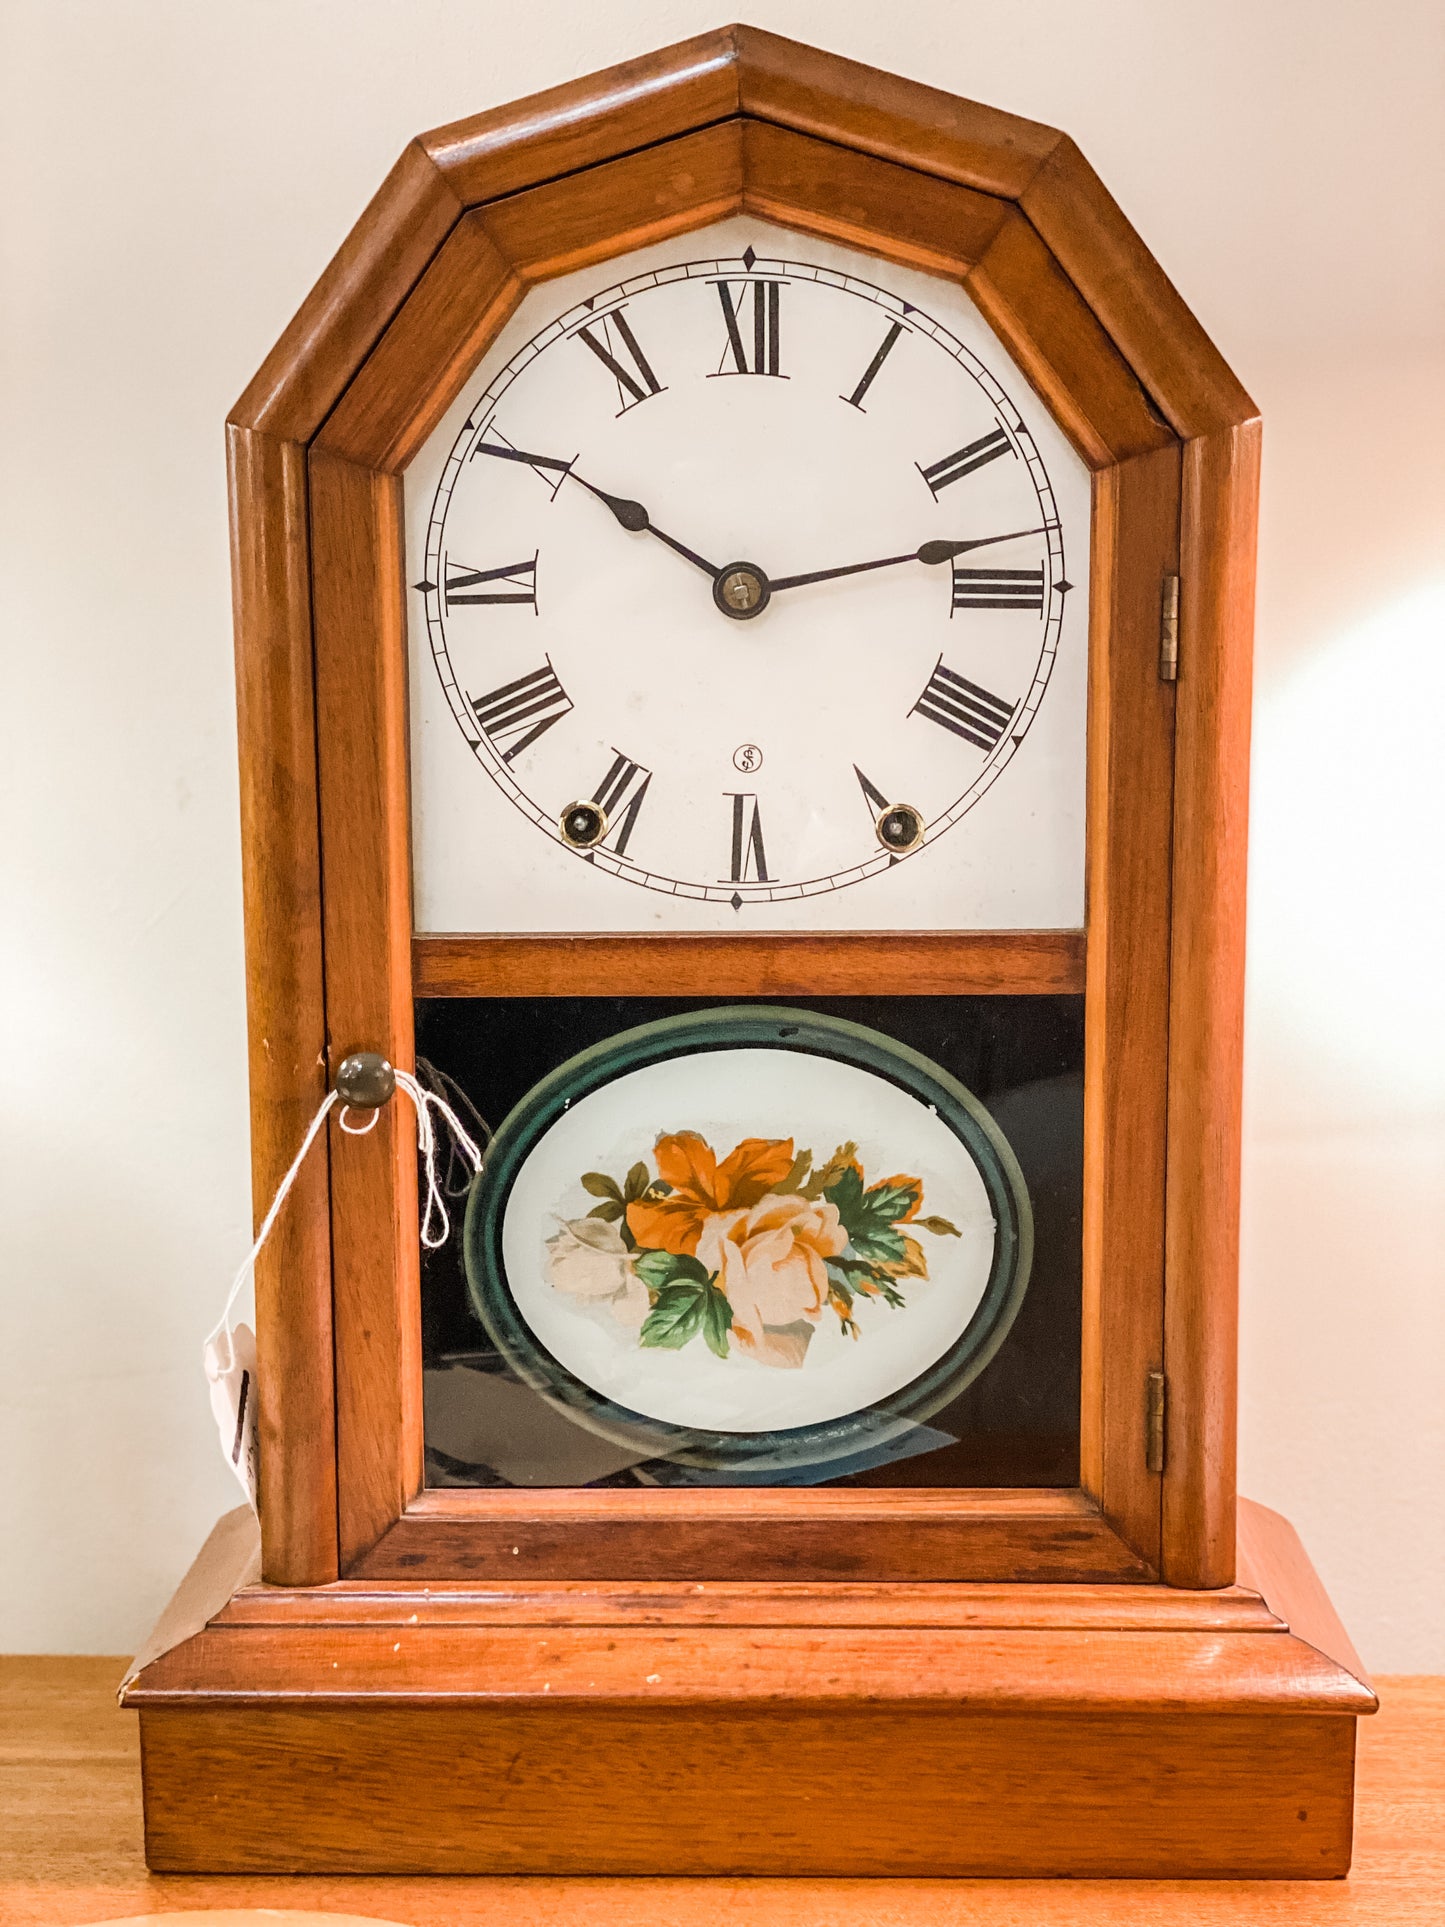 19th Century 8 Day Clock By Seth Thomas